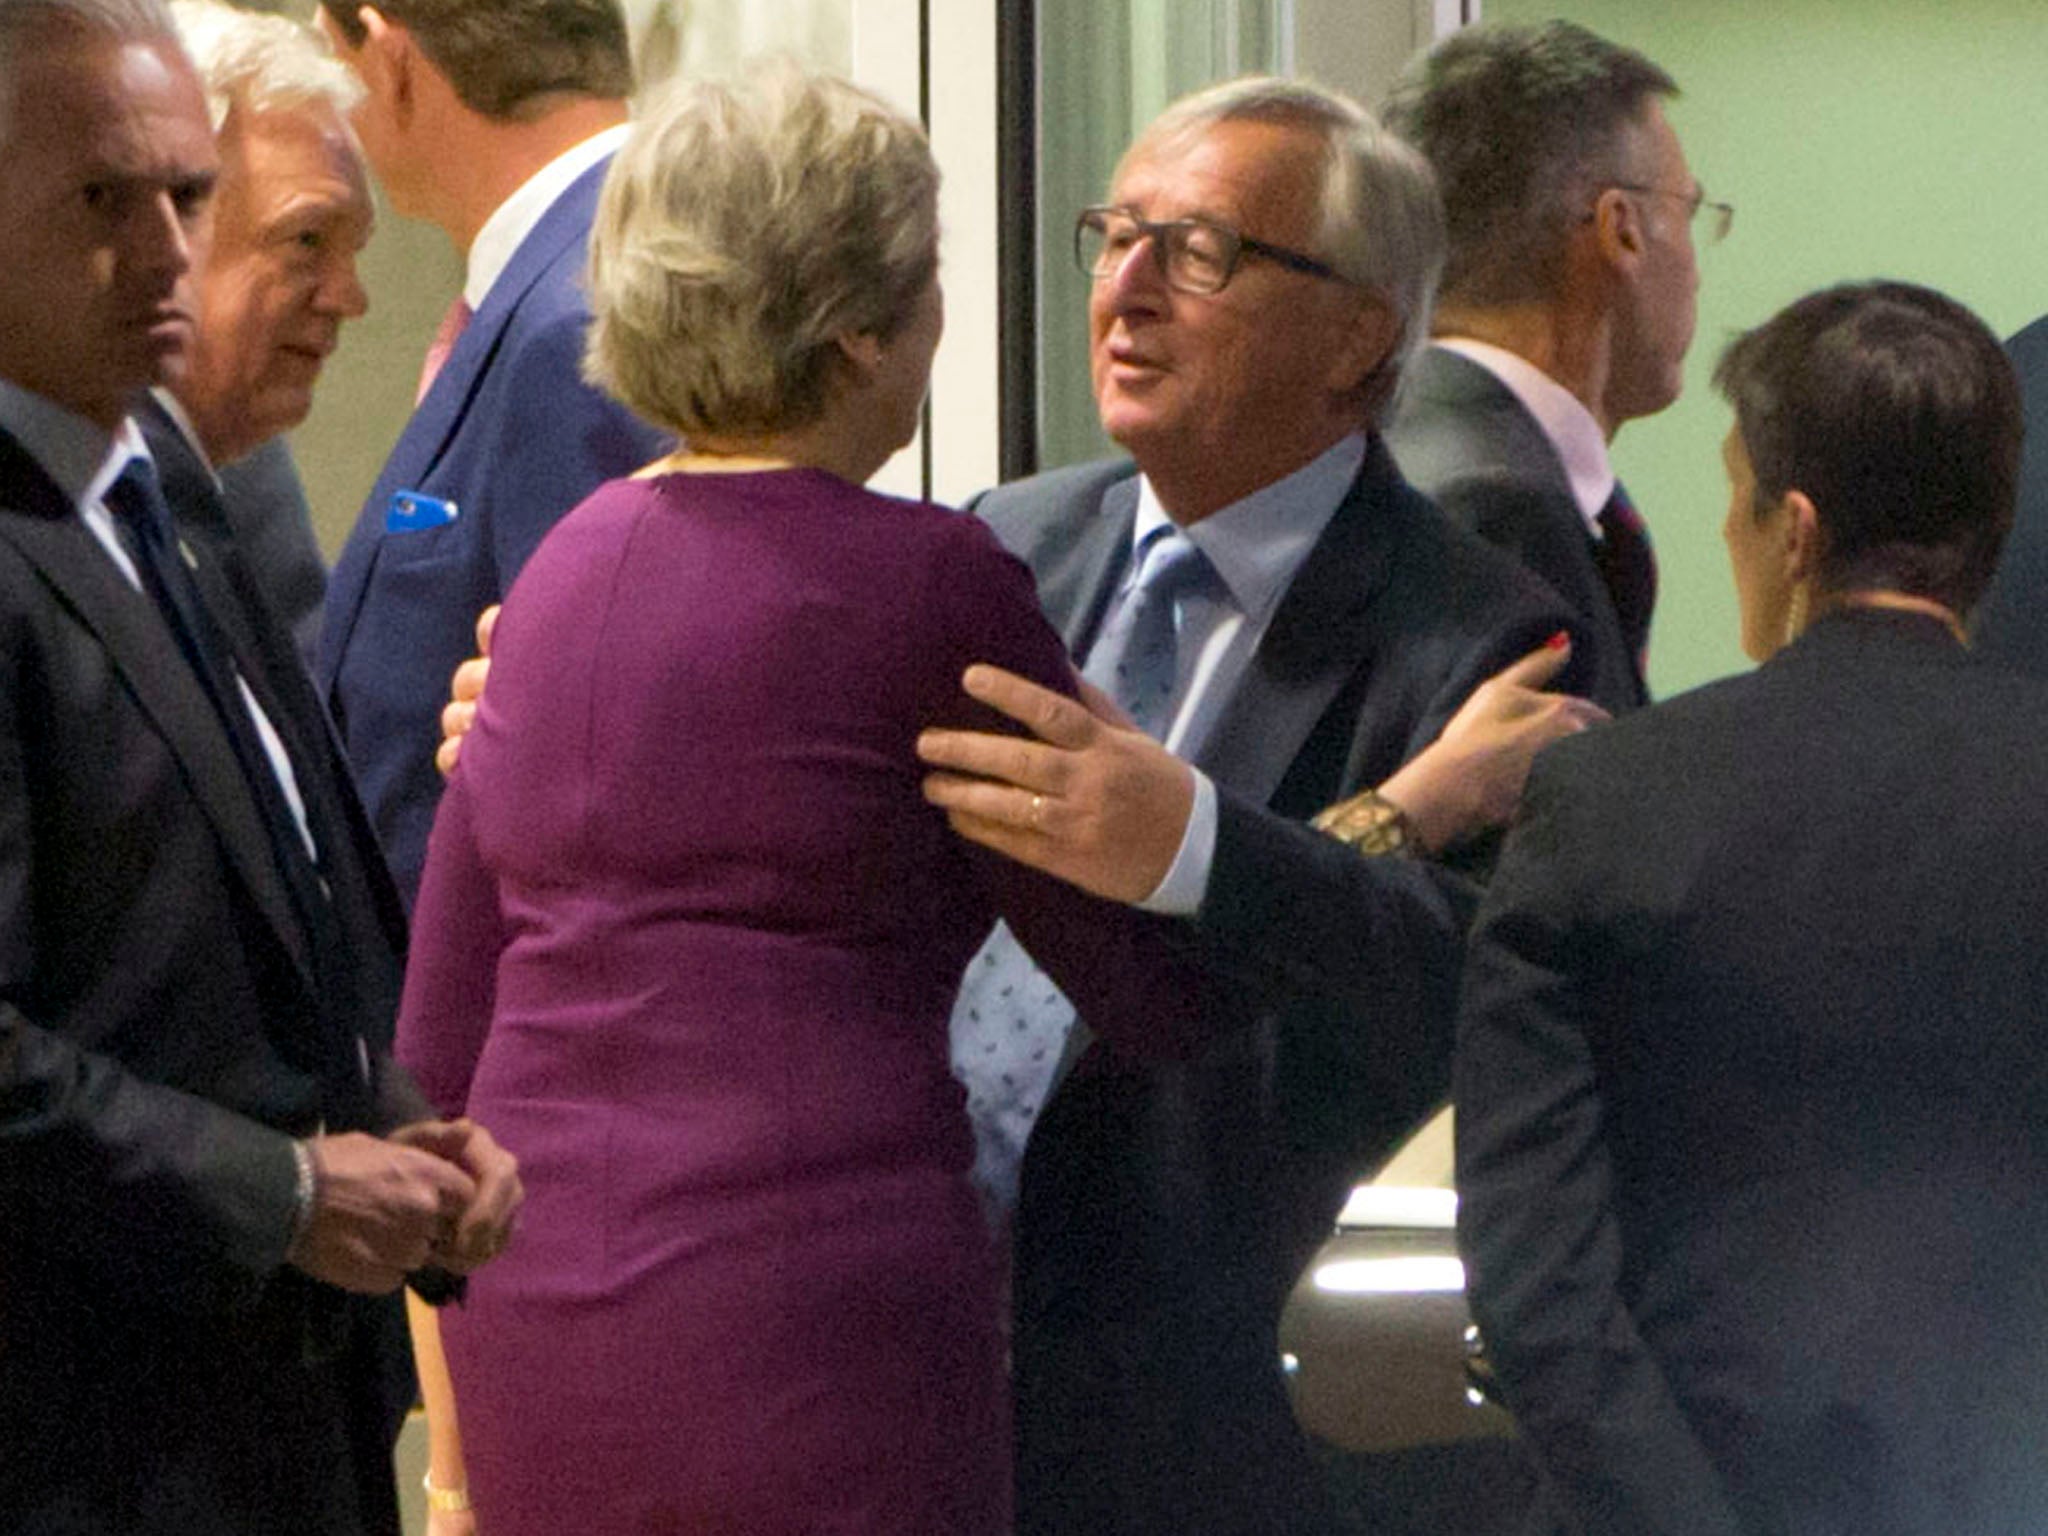 Jean-Claude Juncker embraces Theresa May as David Davis looks on